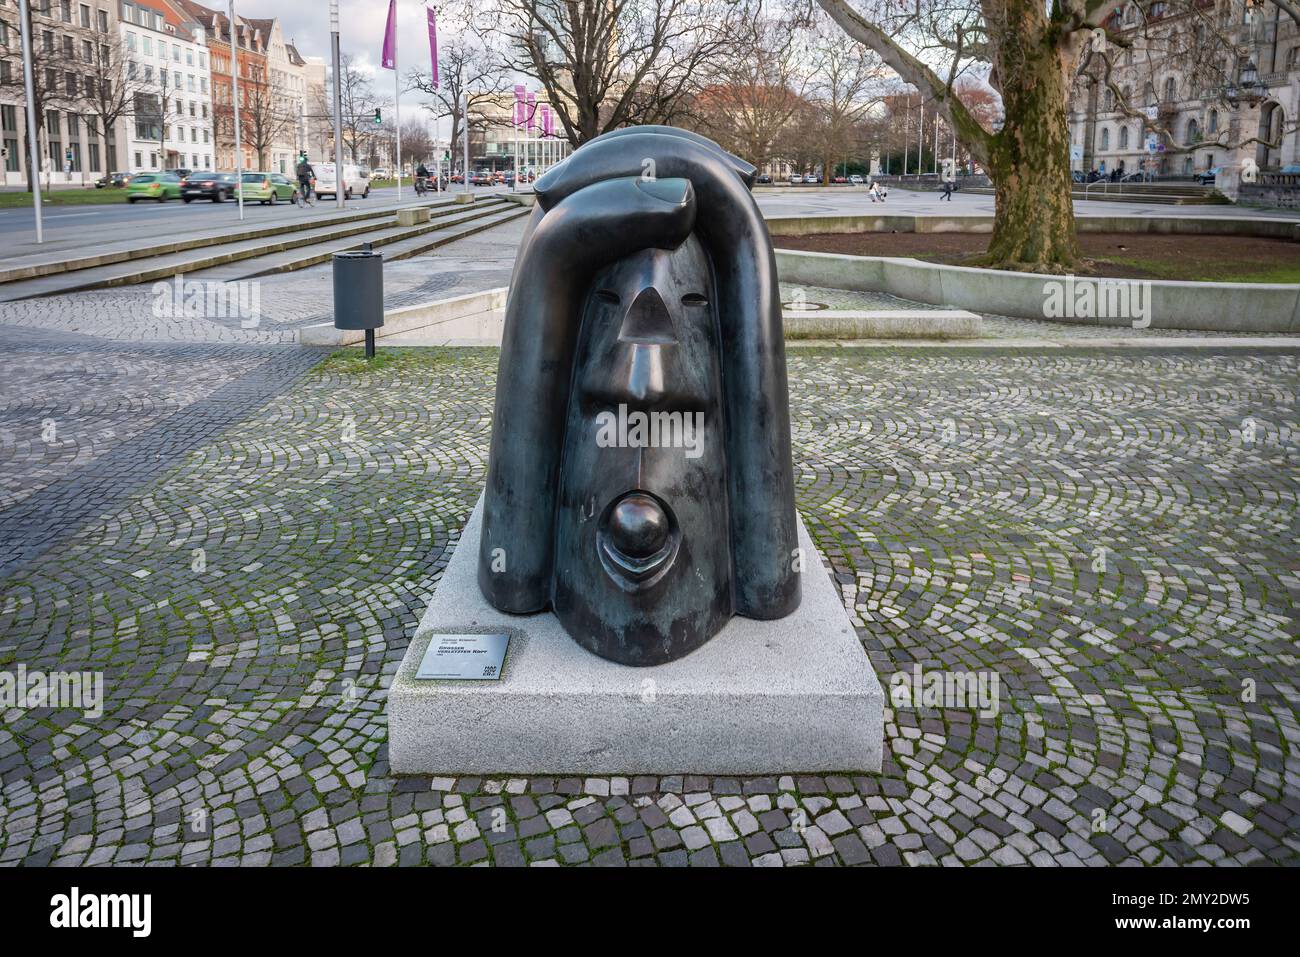 Grosser verletzter Kopf (grosse tête blessée) Sculpture de Rainer Kriester - Hanovre, Basse-Saxe, Allemagne Banque D'Images